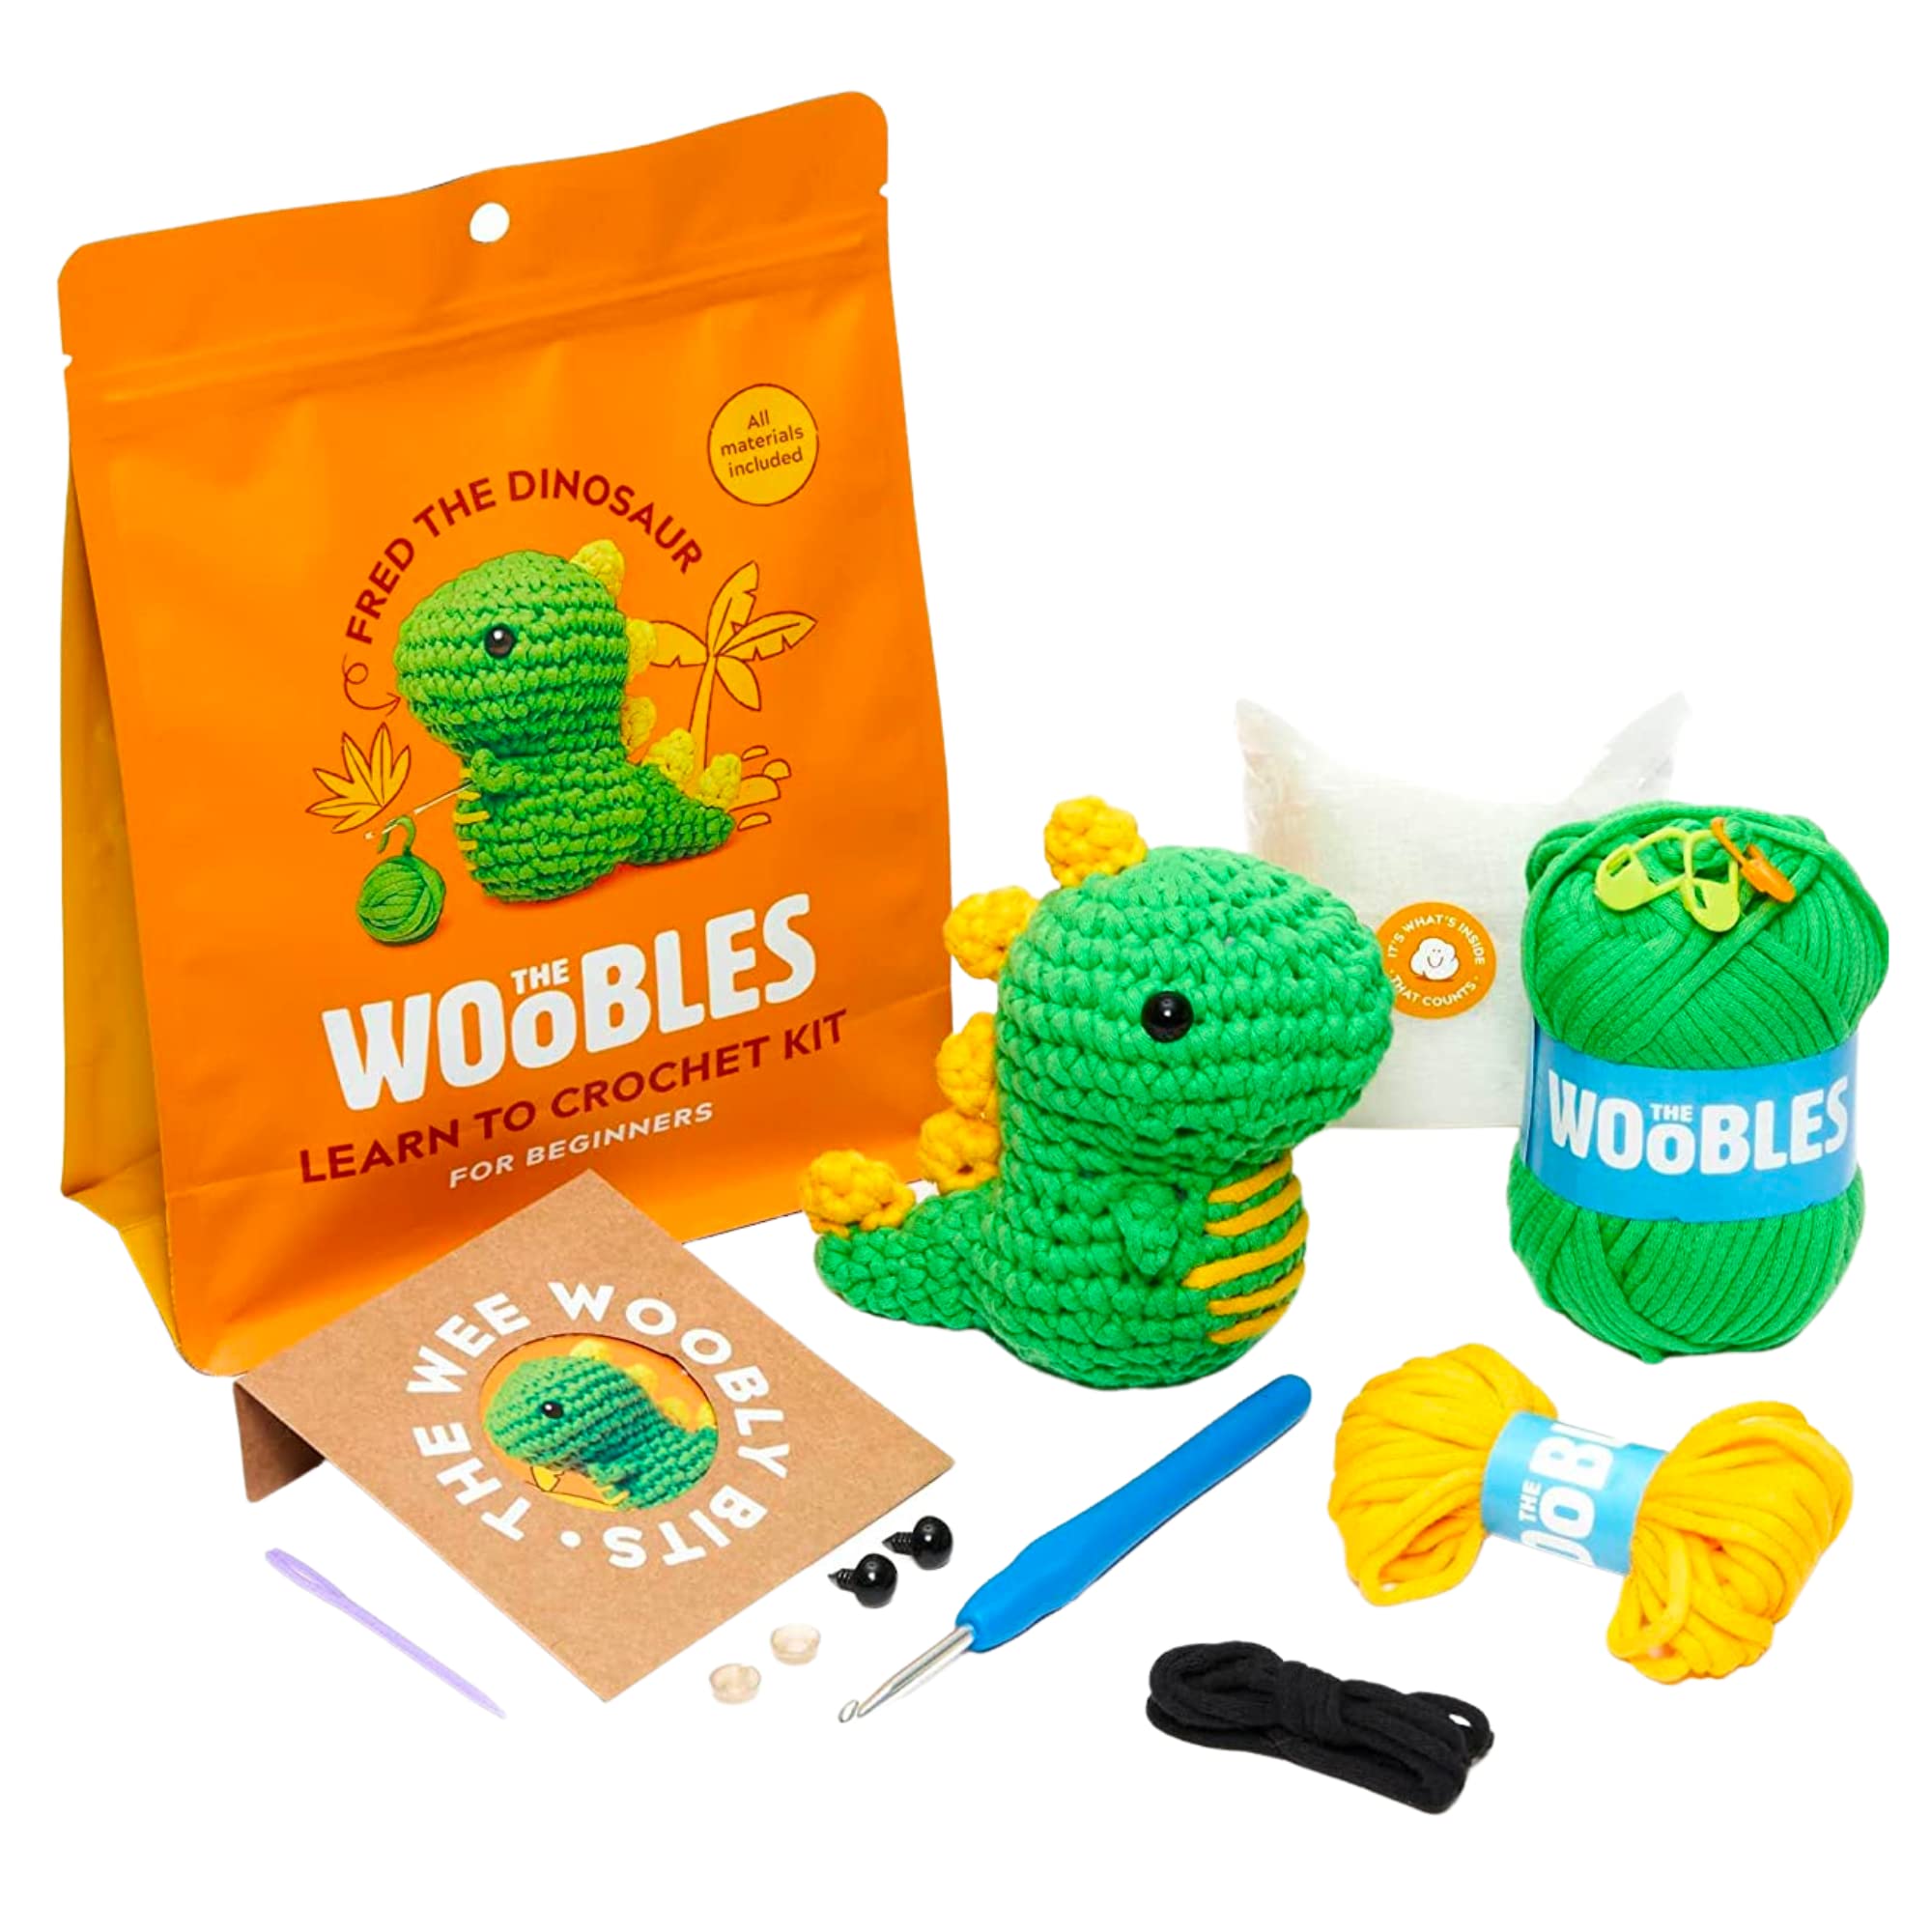 biuzii croet full kit for beginners, crochet kit, the woobles